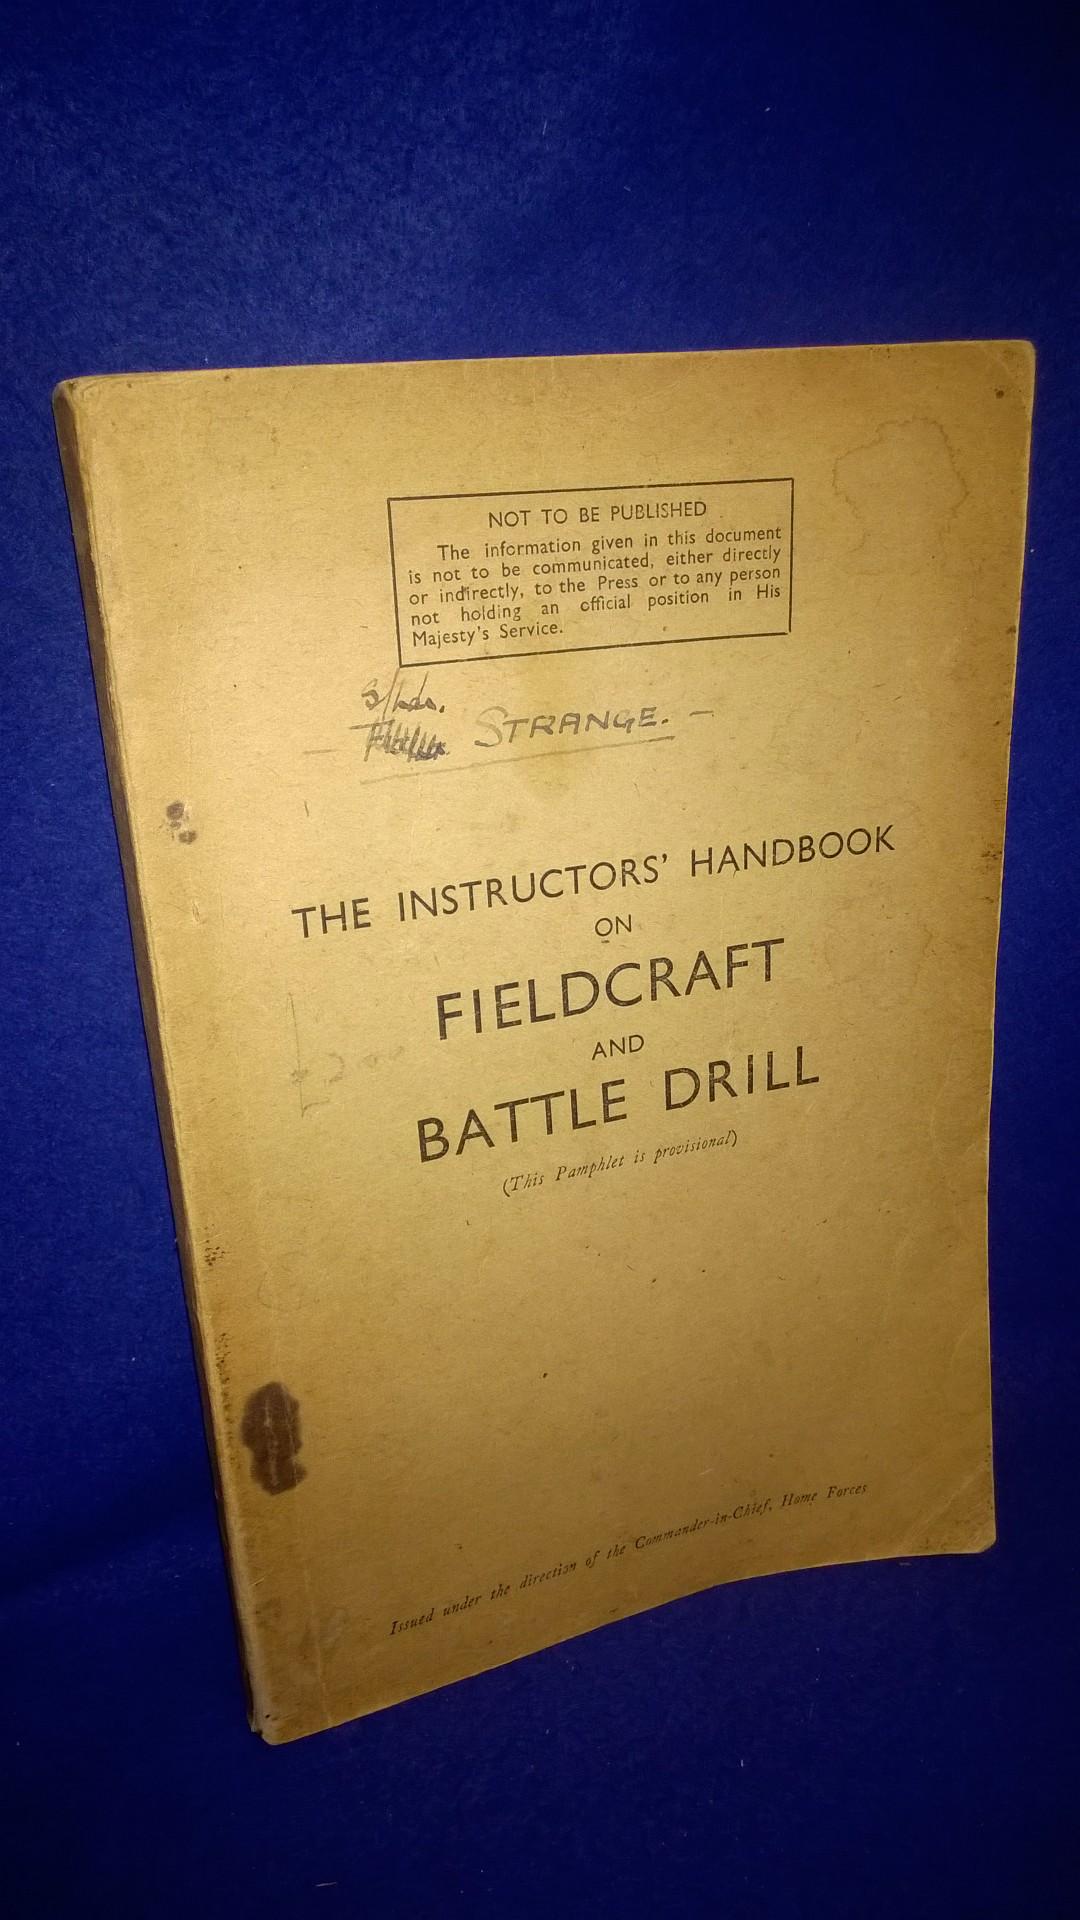 The Instructors' Handbook on Fieldcraft and Battle Drill,1942.